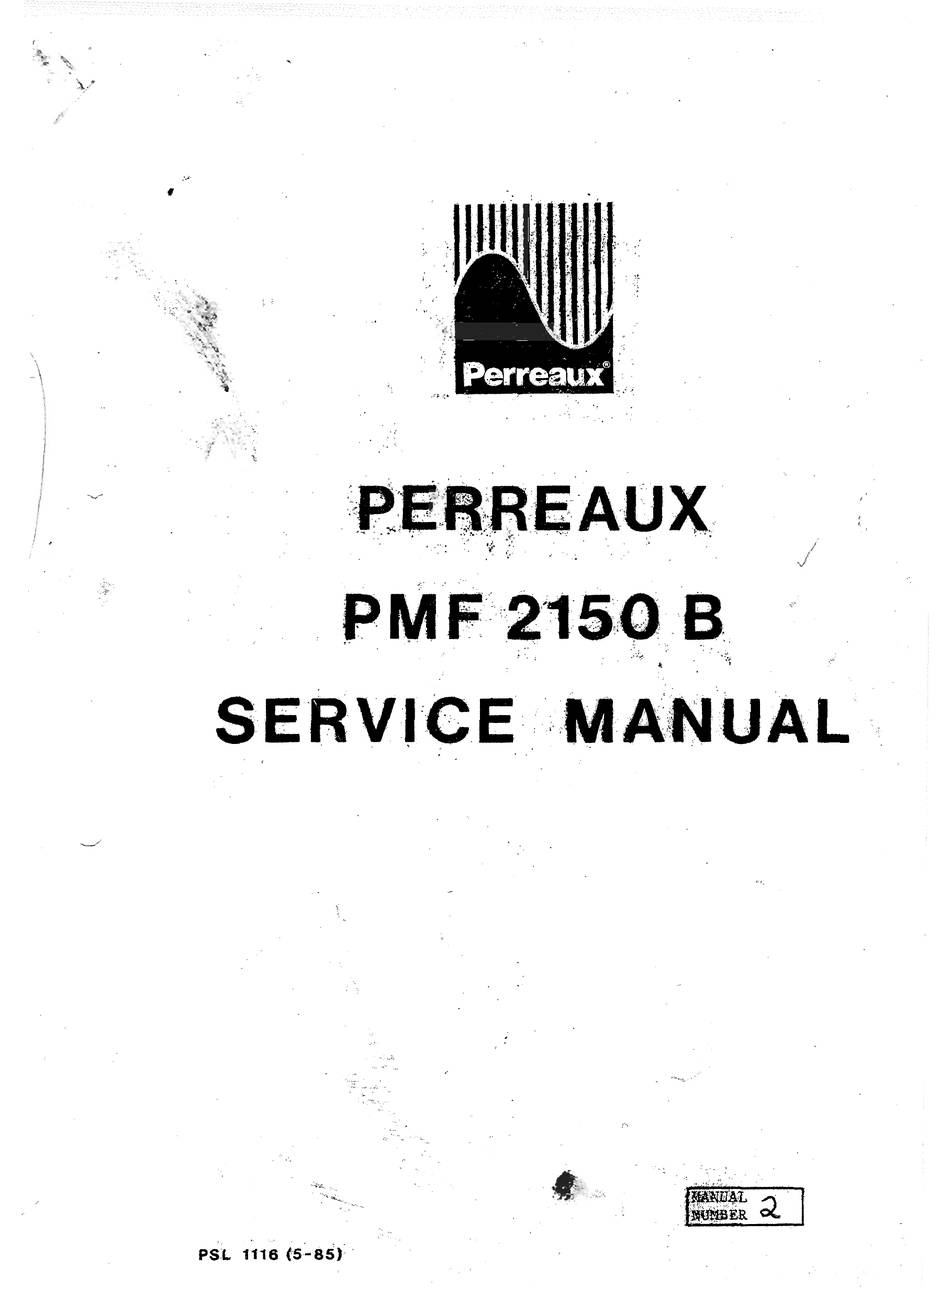 Perreaux Industries PMF 2150B